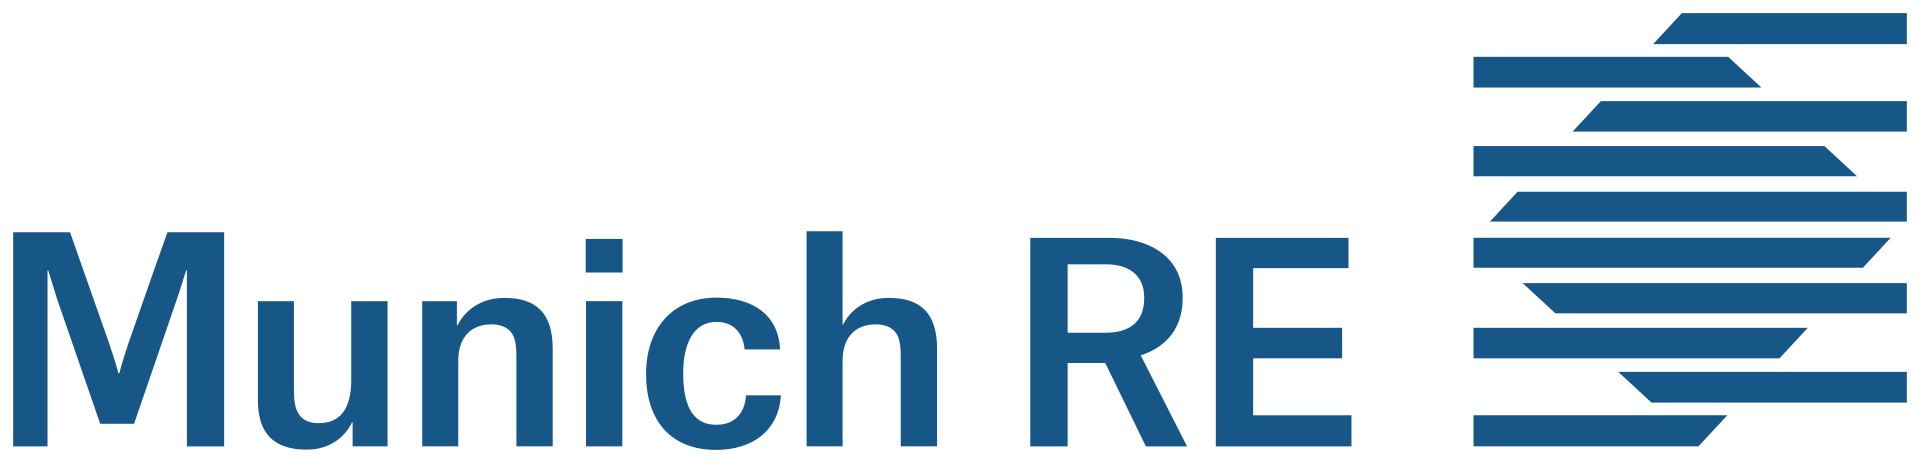 Logo Munich RE